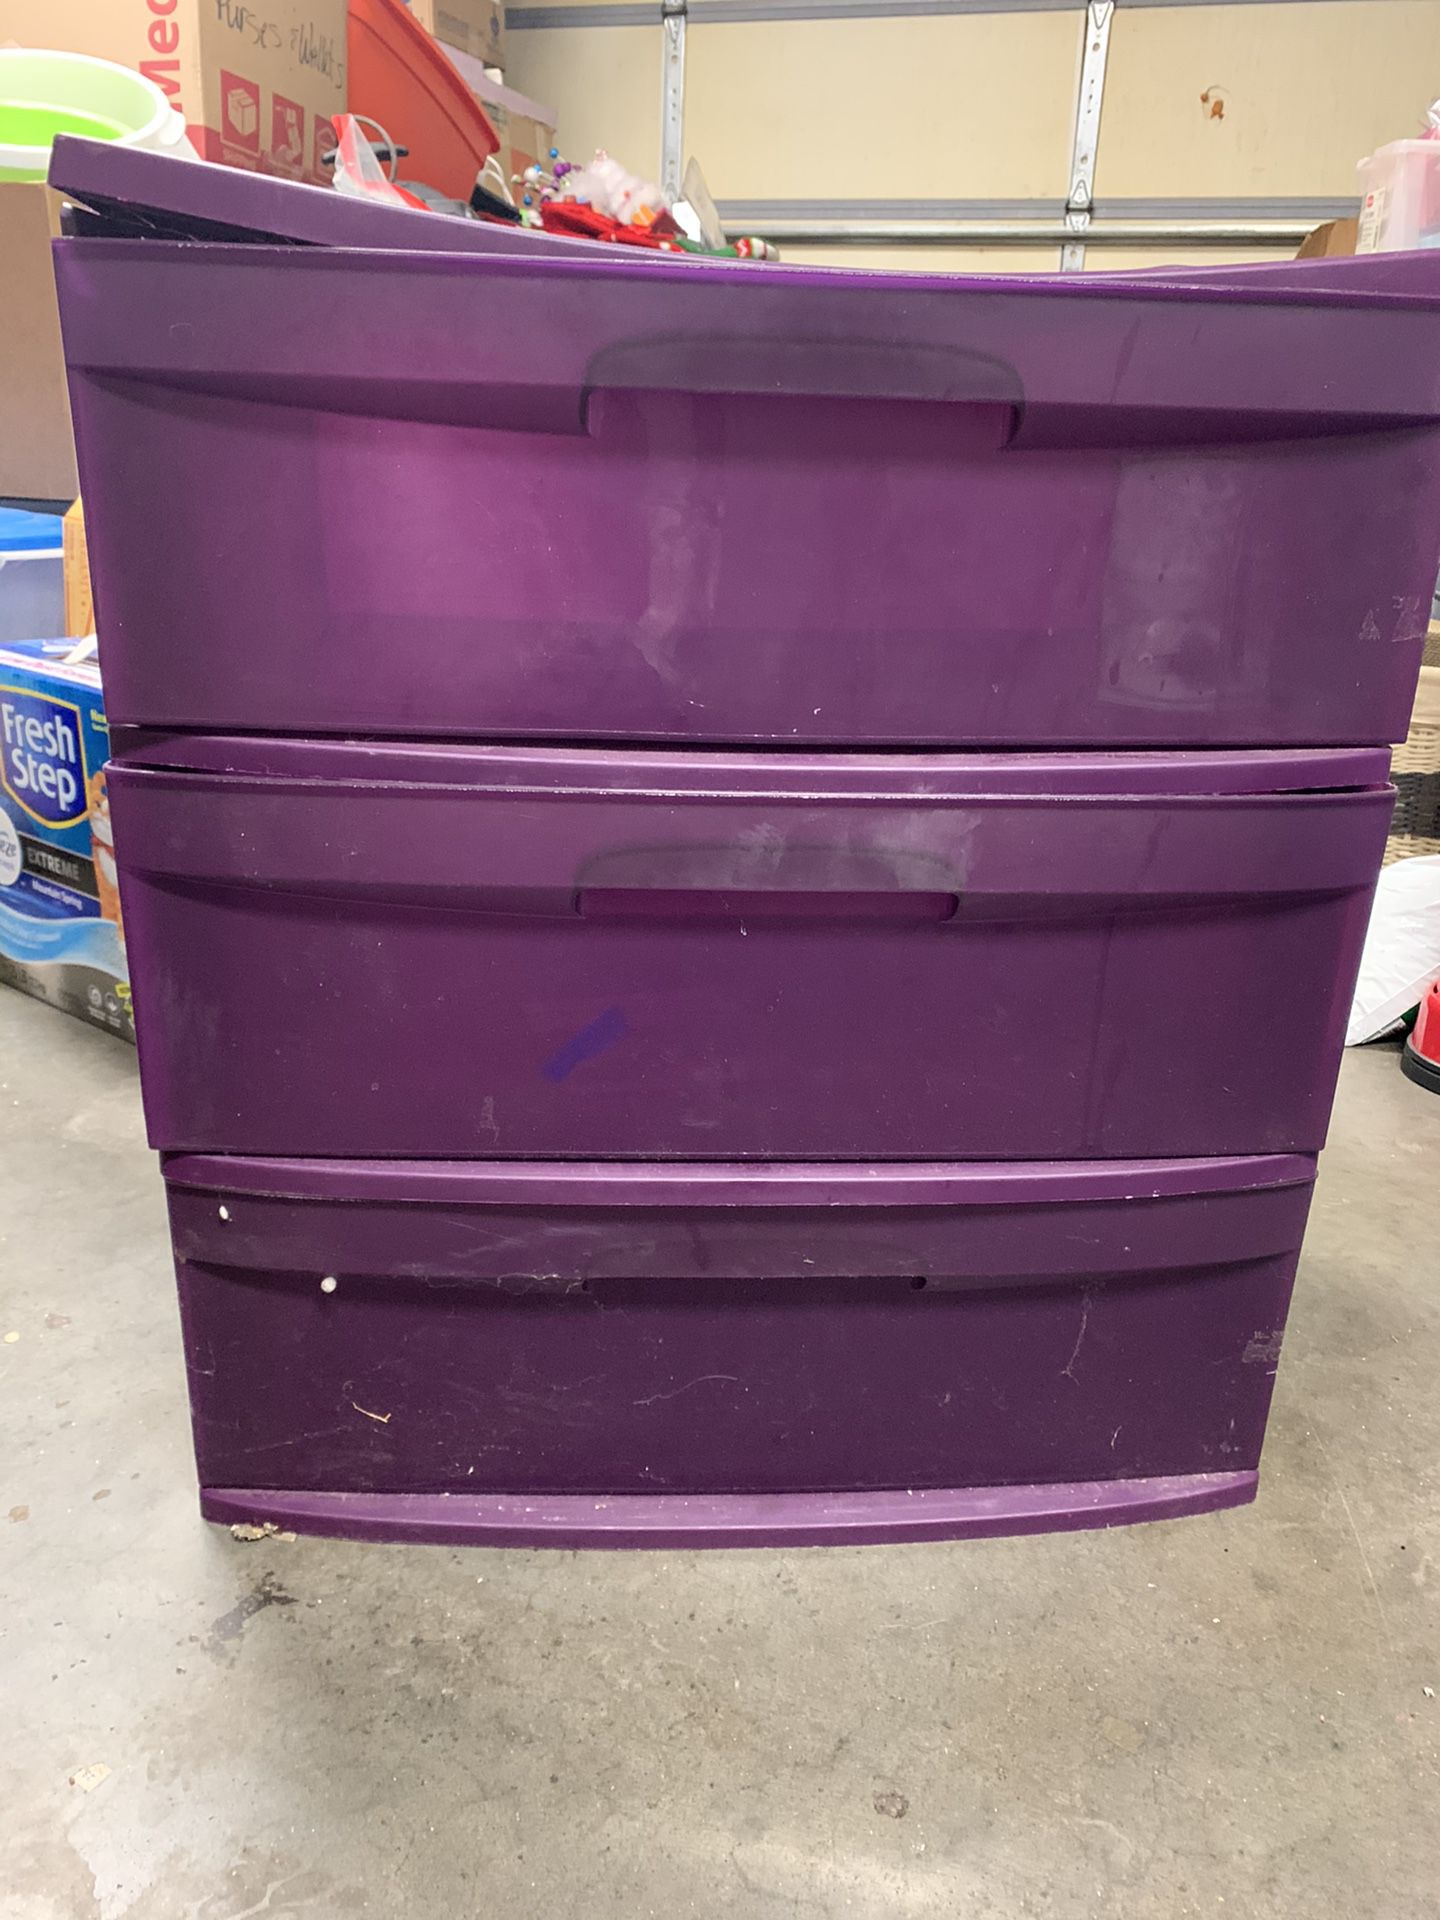 3 drawer storage cart with wheels. $6.00